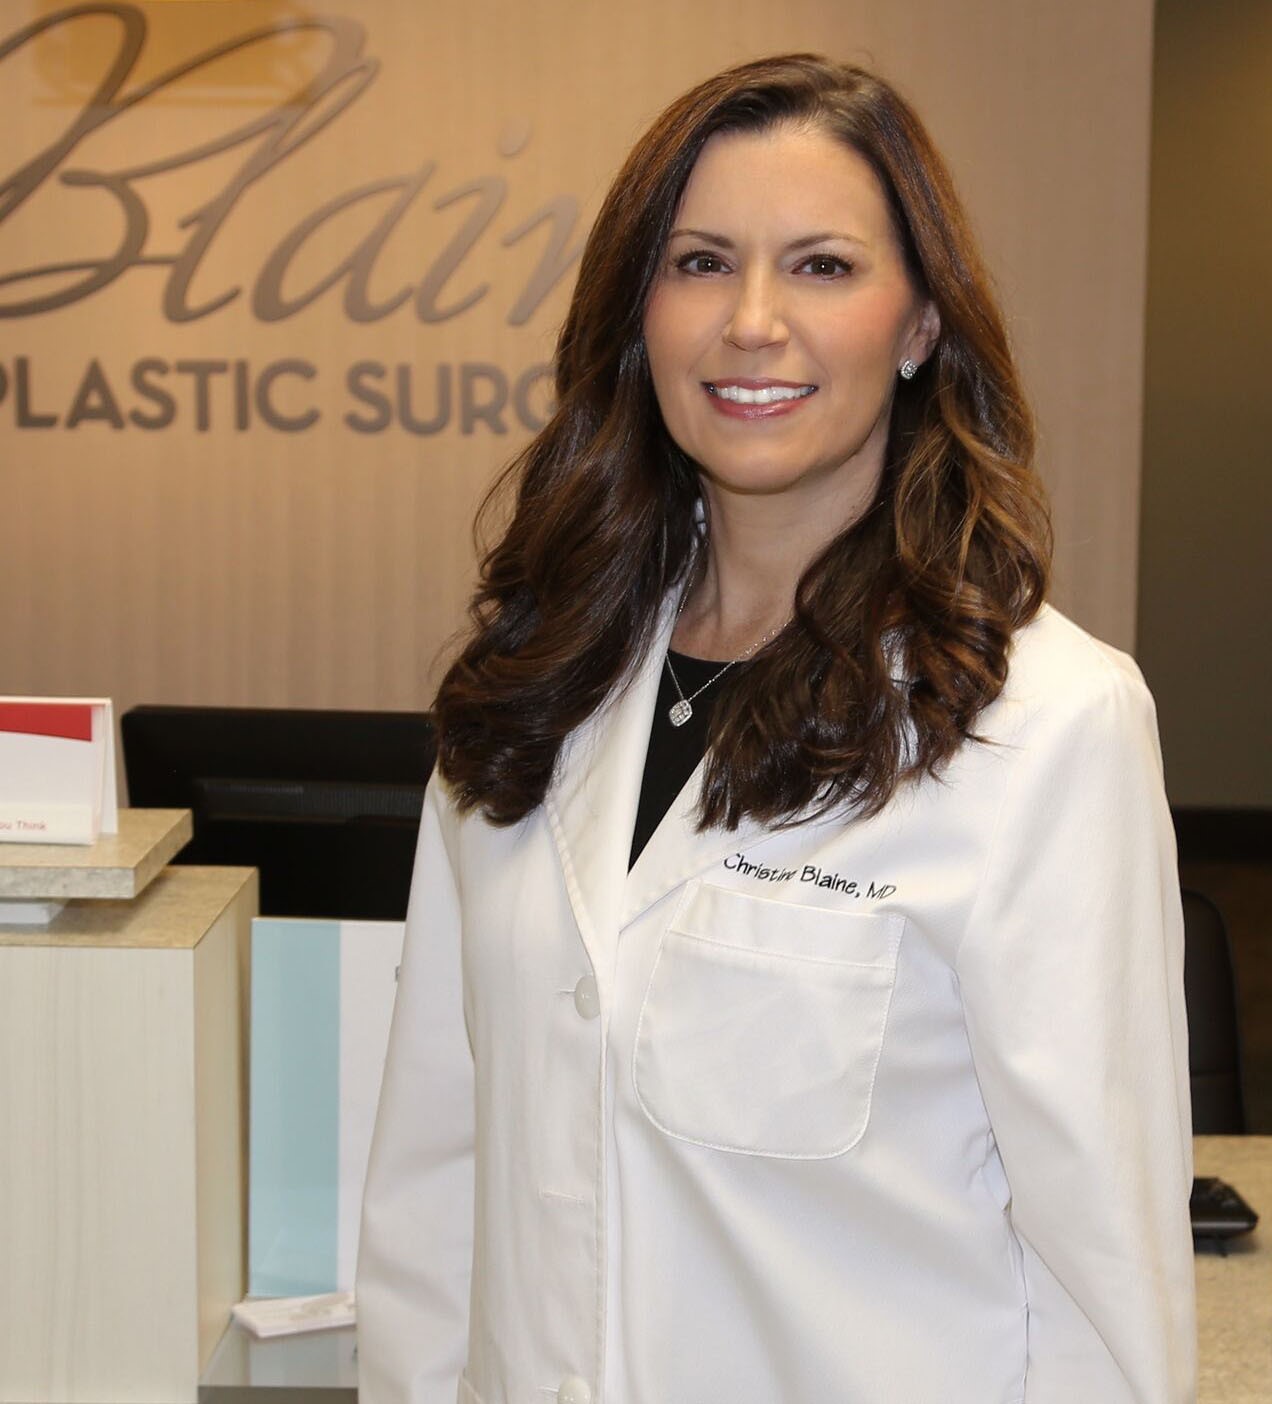 Anna & Raven Speak With Dr. Christine Blaine From Blaine Plastic Surgery!